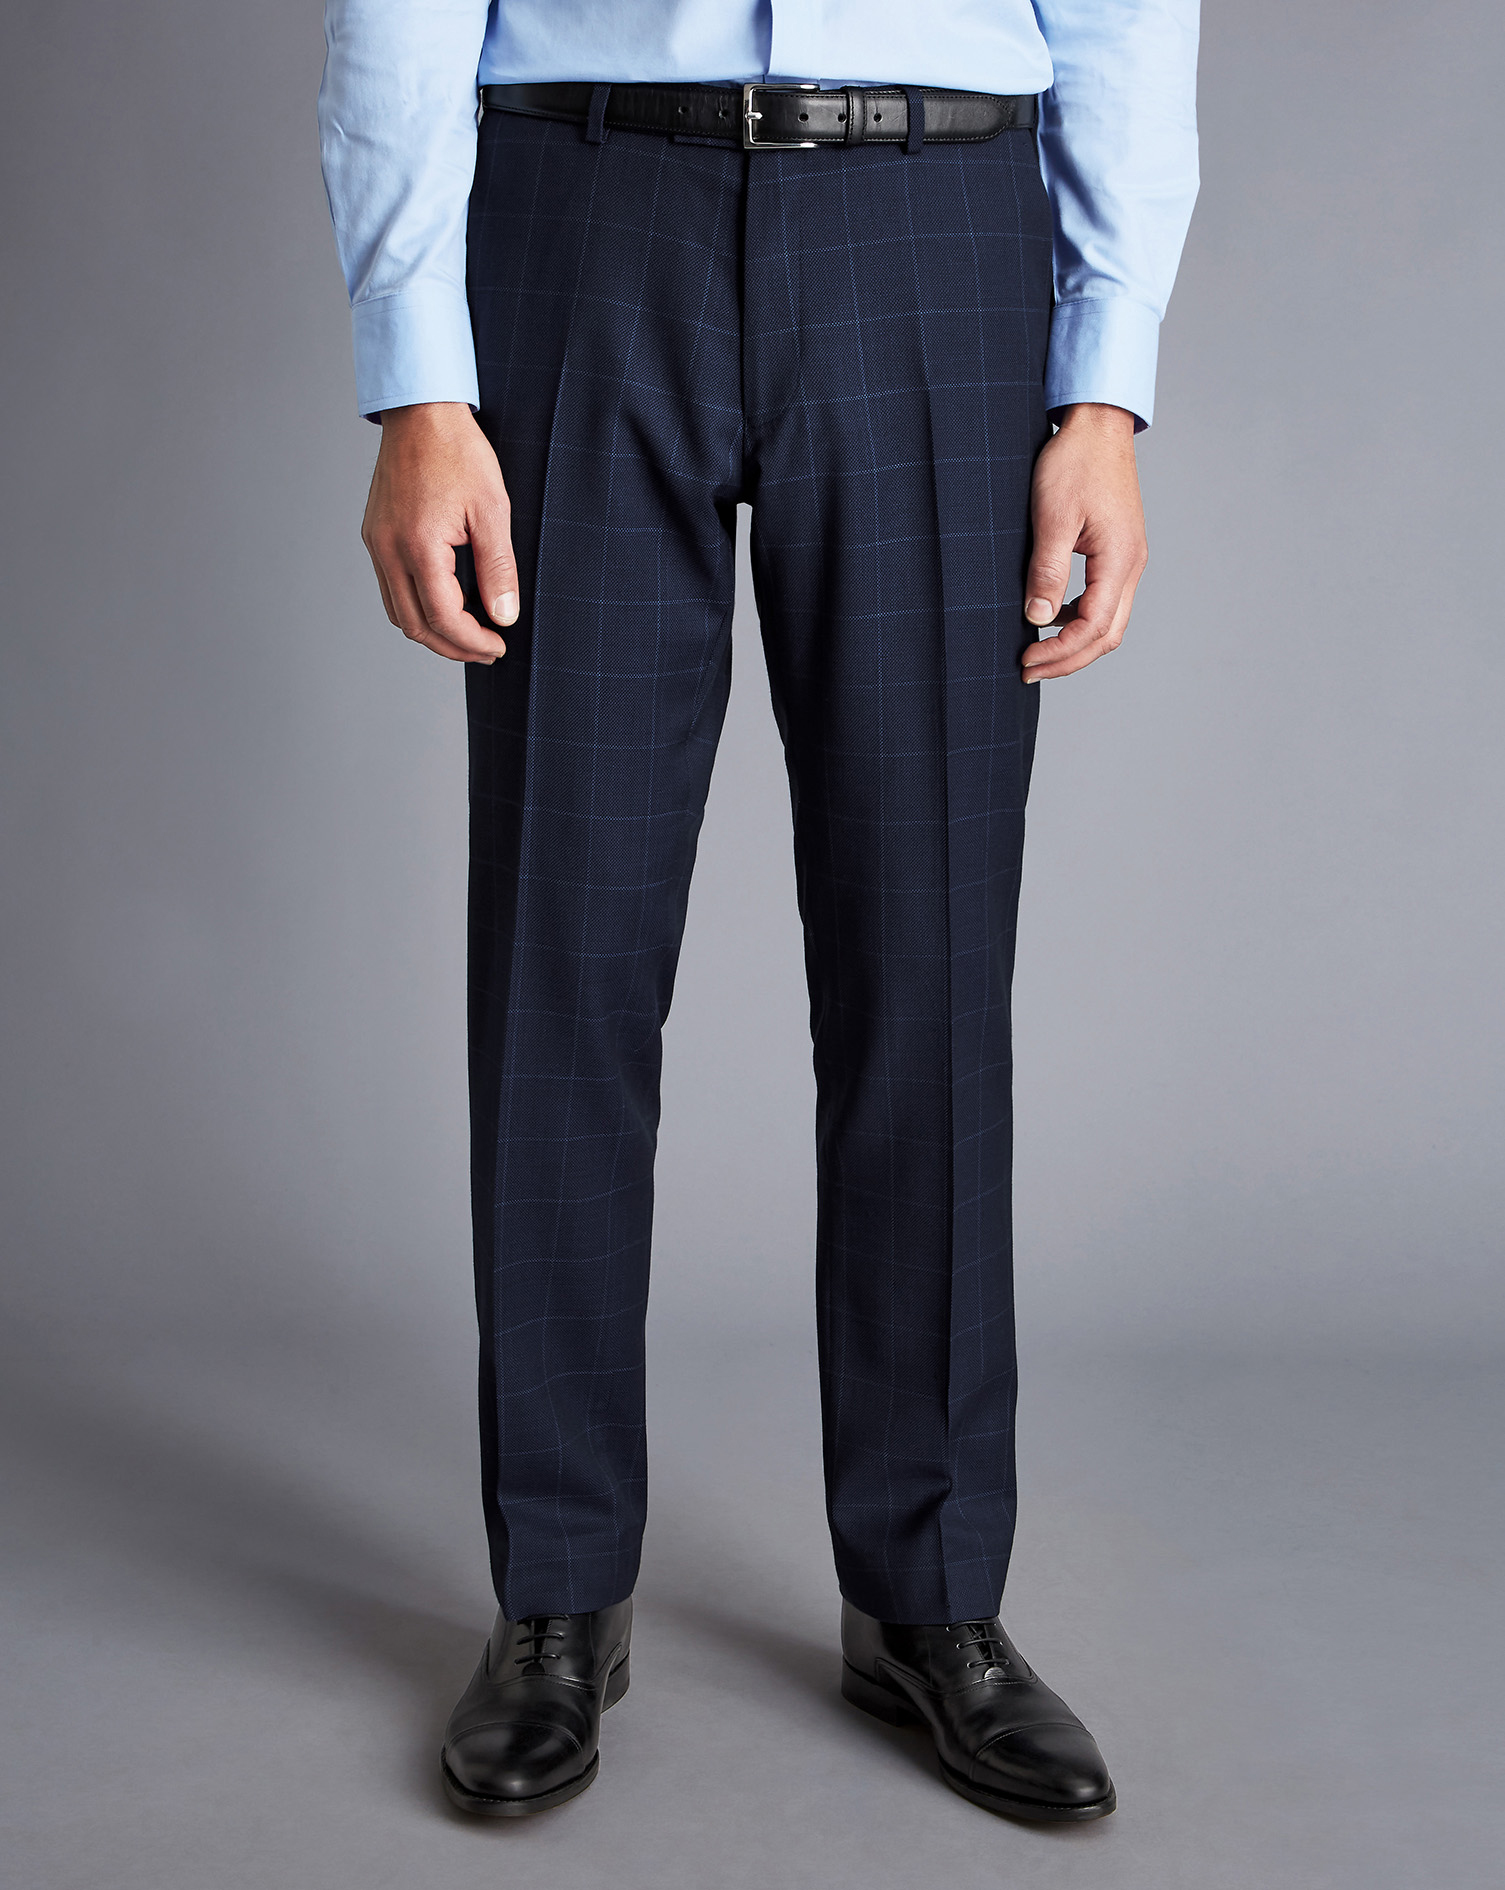 Men's Charles Tyrwhitt Windowpane Check Birdseye Travel Suit Trousers - Navy Blue Size 30/38U Wool
